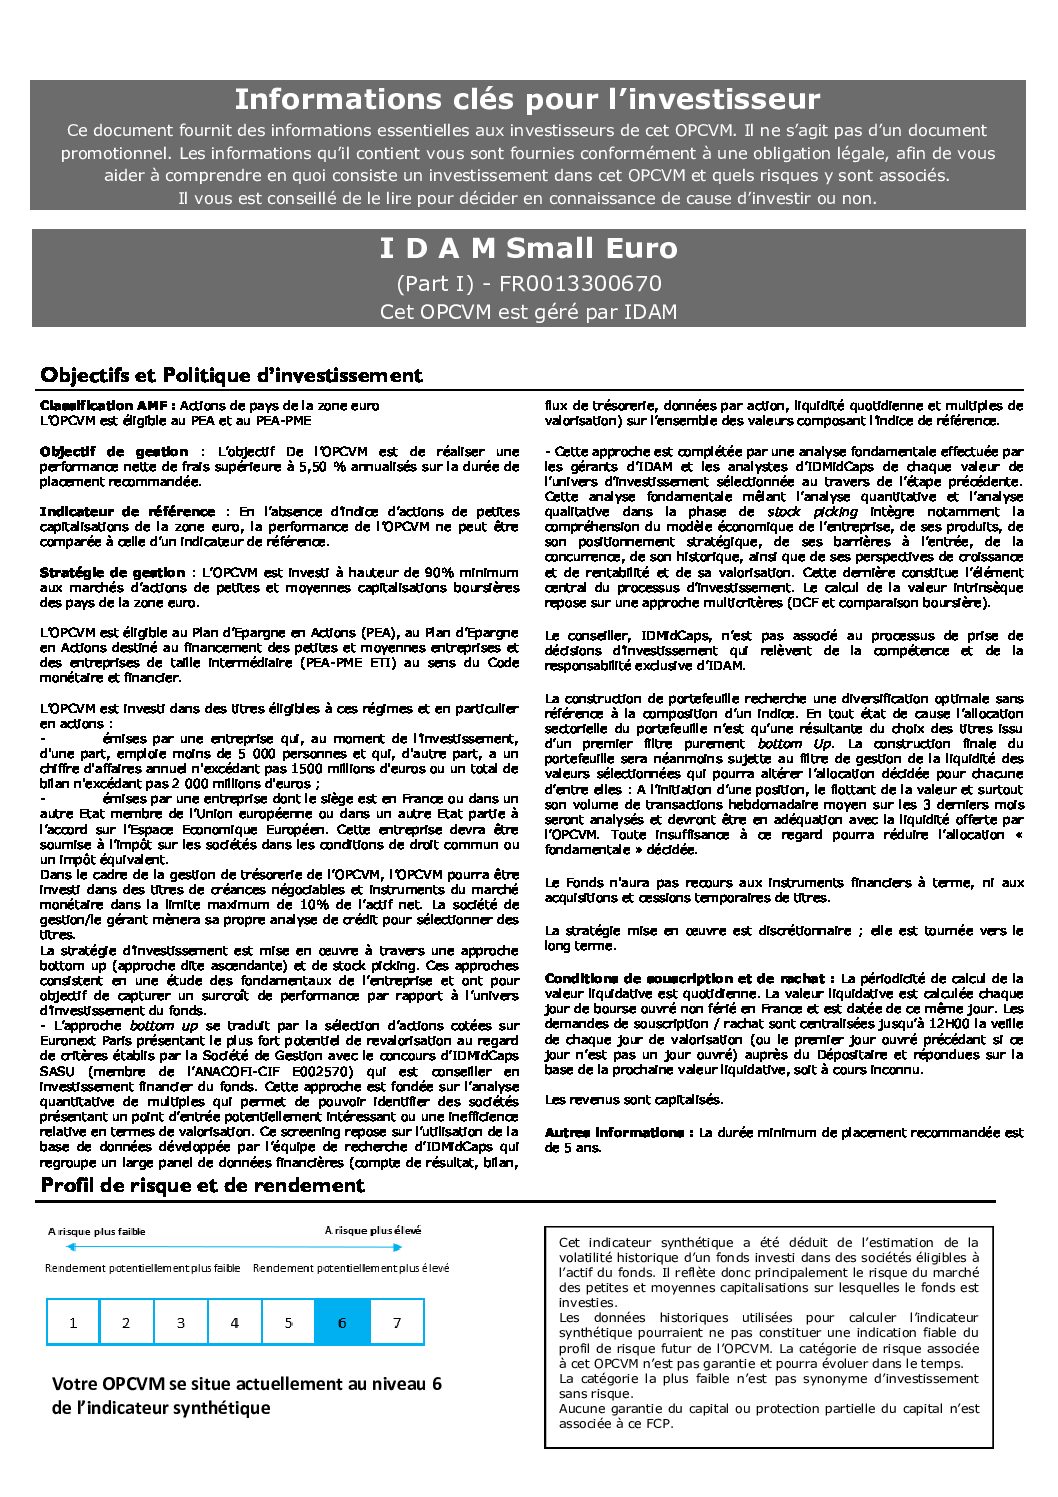 DICI-Part-I-IDAM-SMALL-EURO-1-pdf